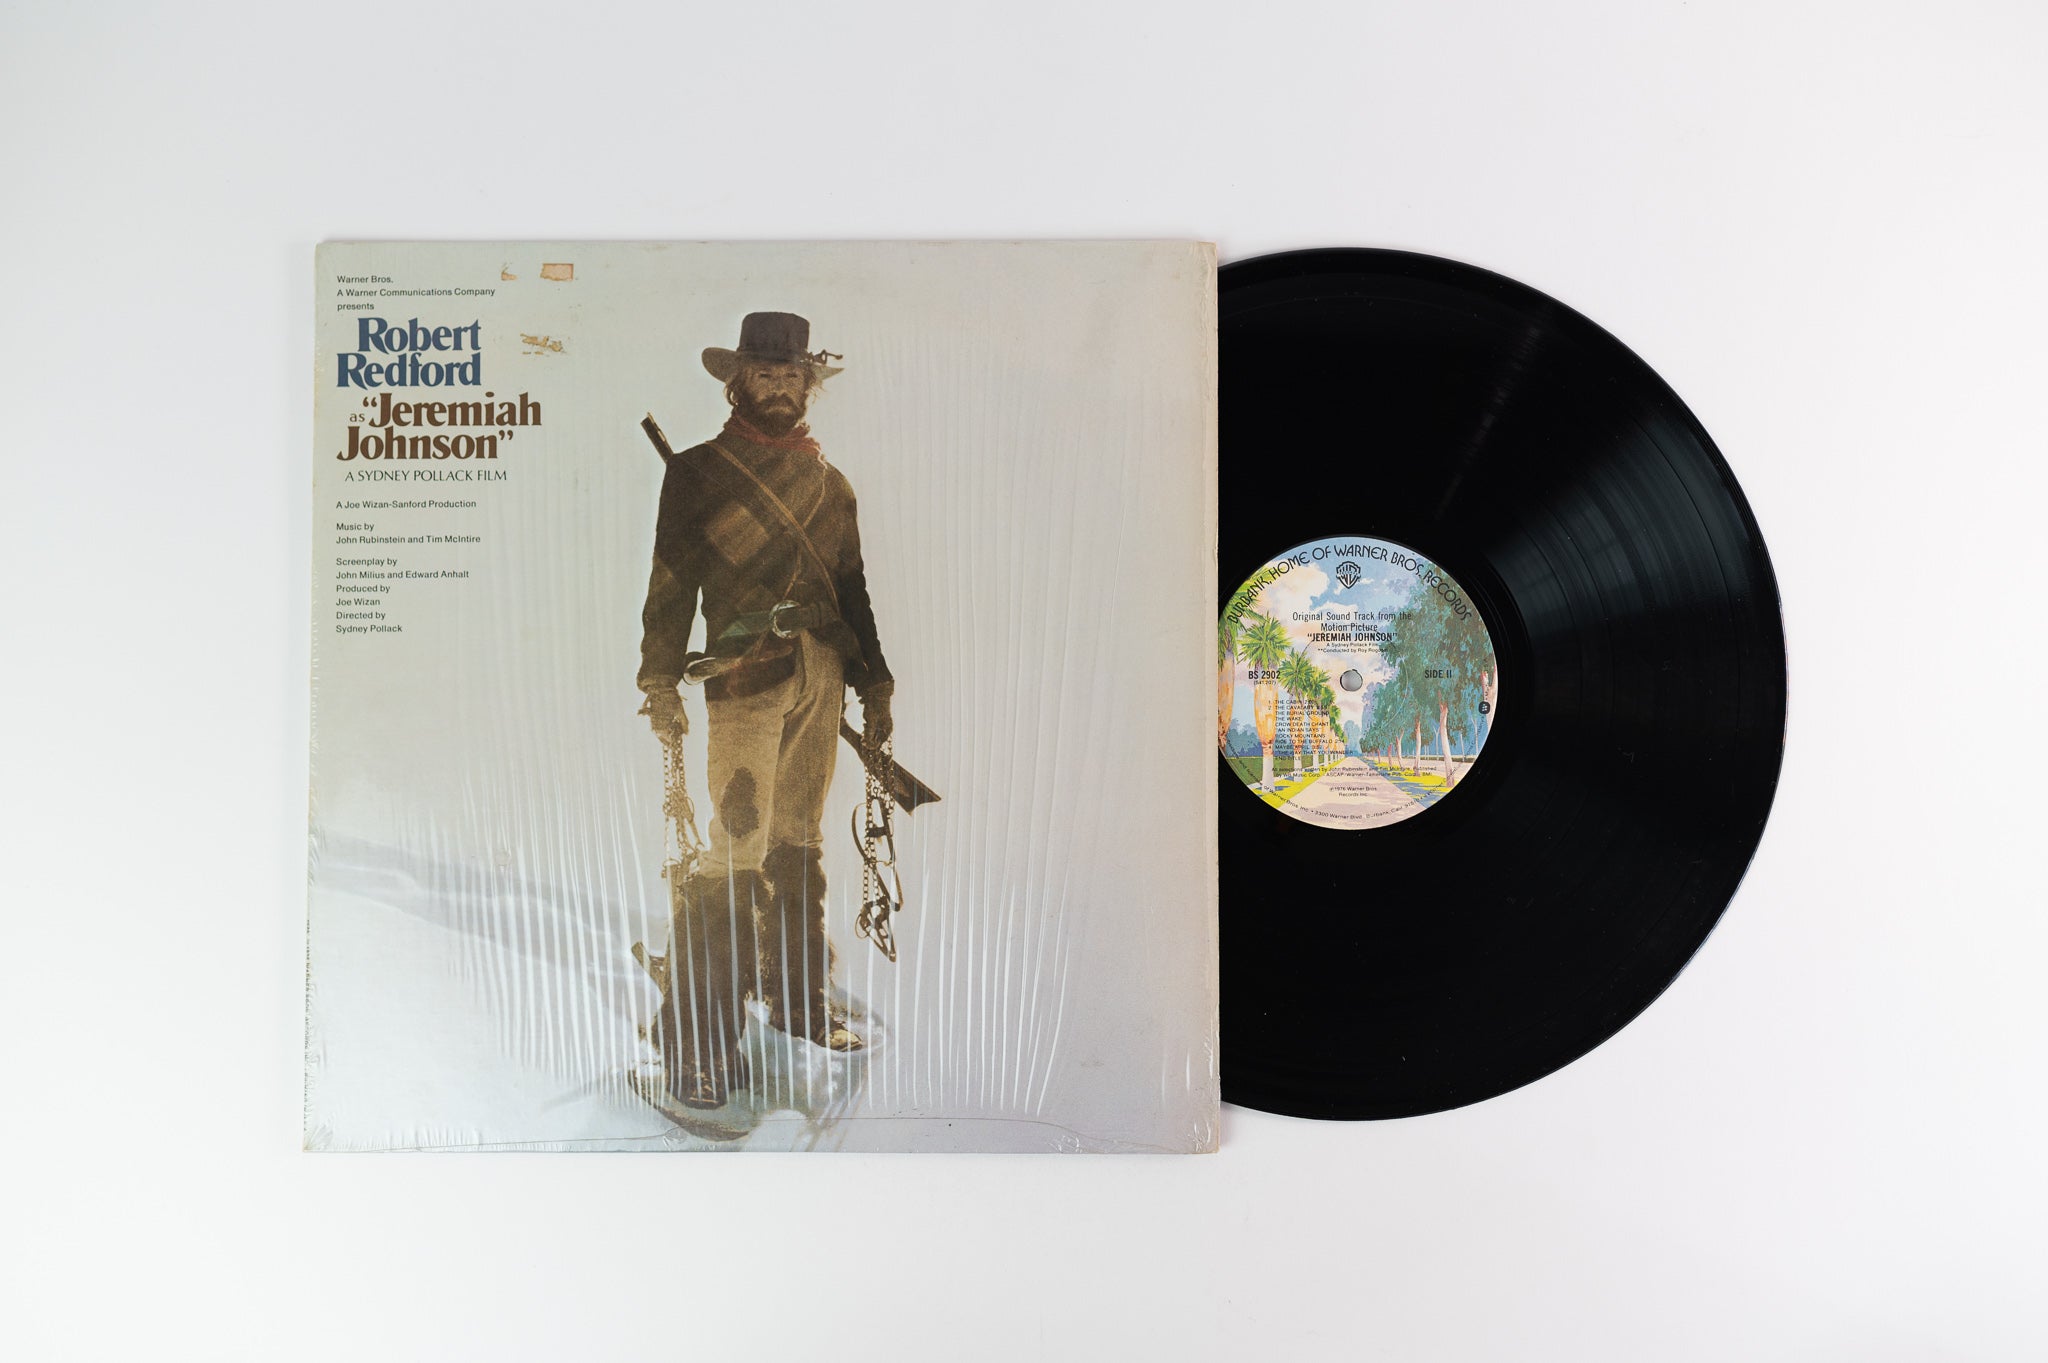 John Rubinstein - Jeremiah Johnson (Original Sound Track) on Warner Bros. Records